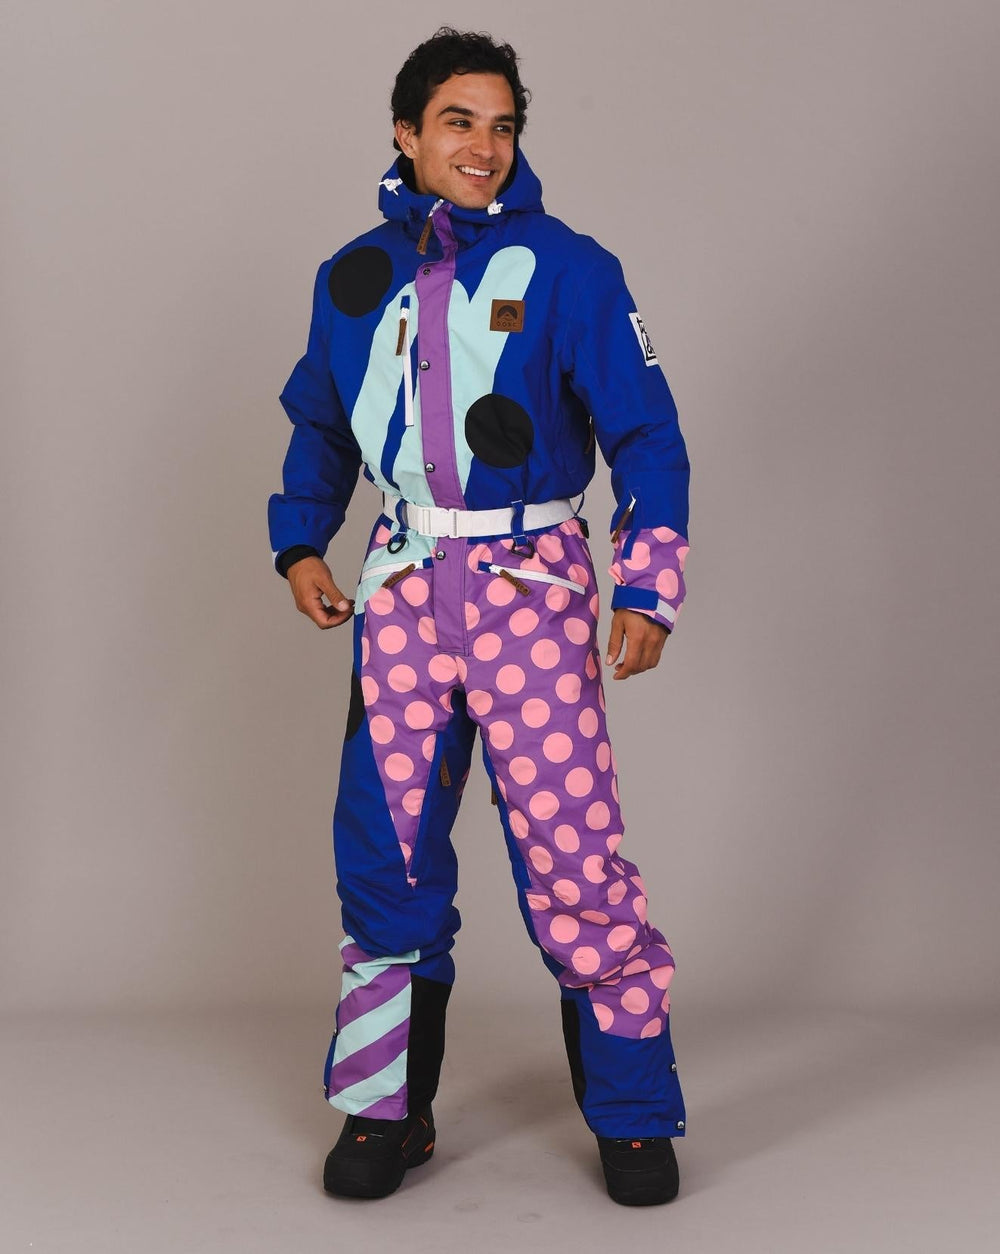 OOSC Clothing Powder Hound Ski Suit Unisex